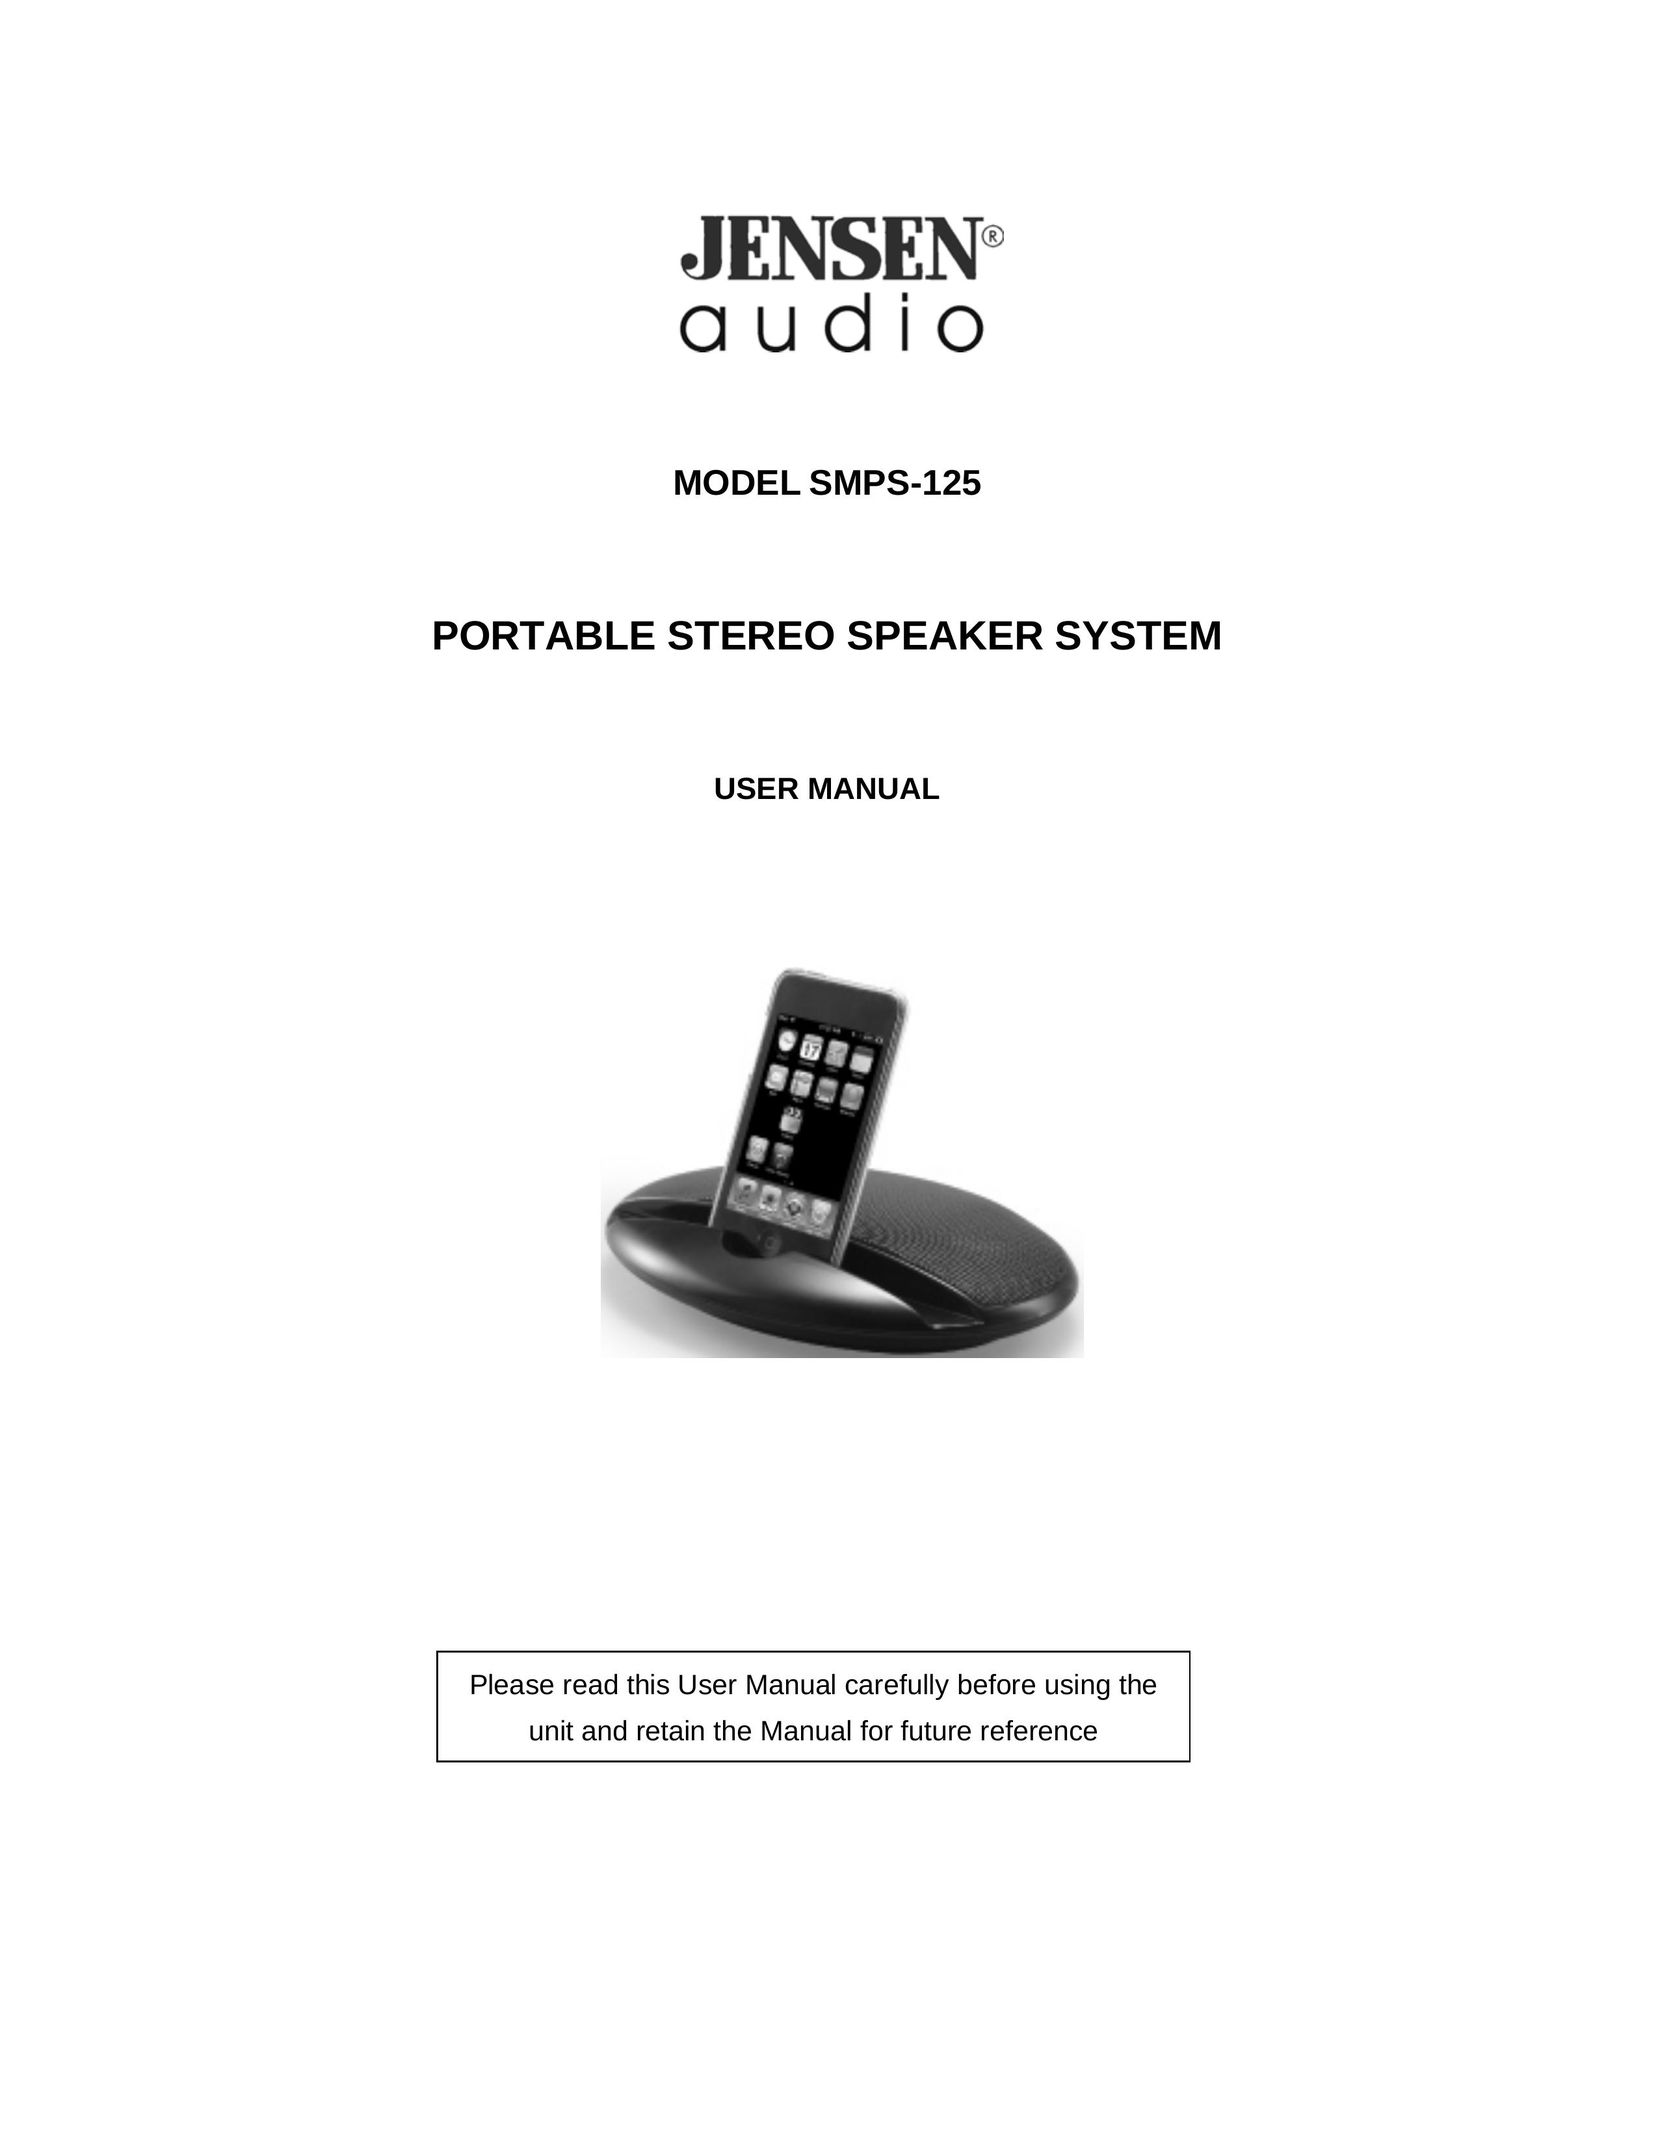 Jensen SMPS-125 Portable Speaker User Manual